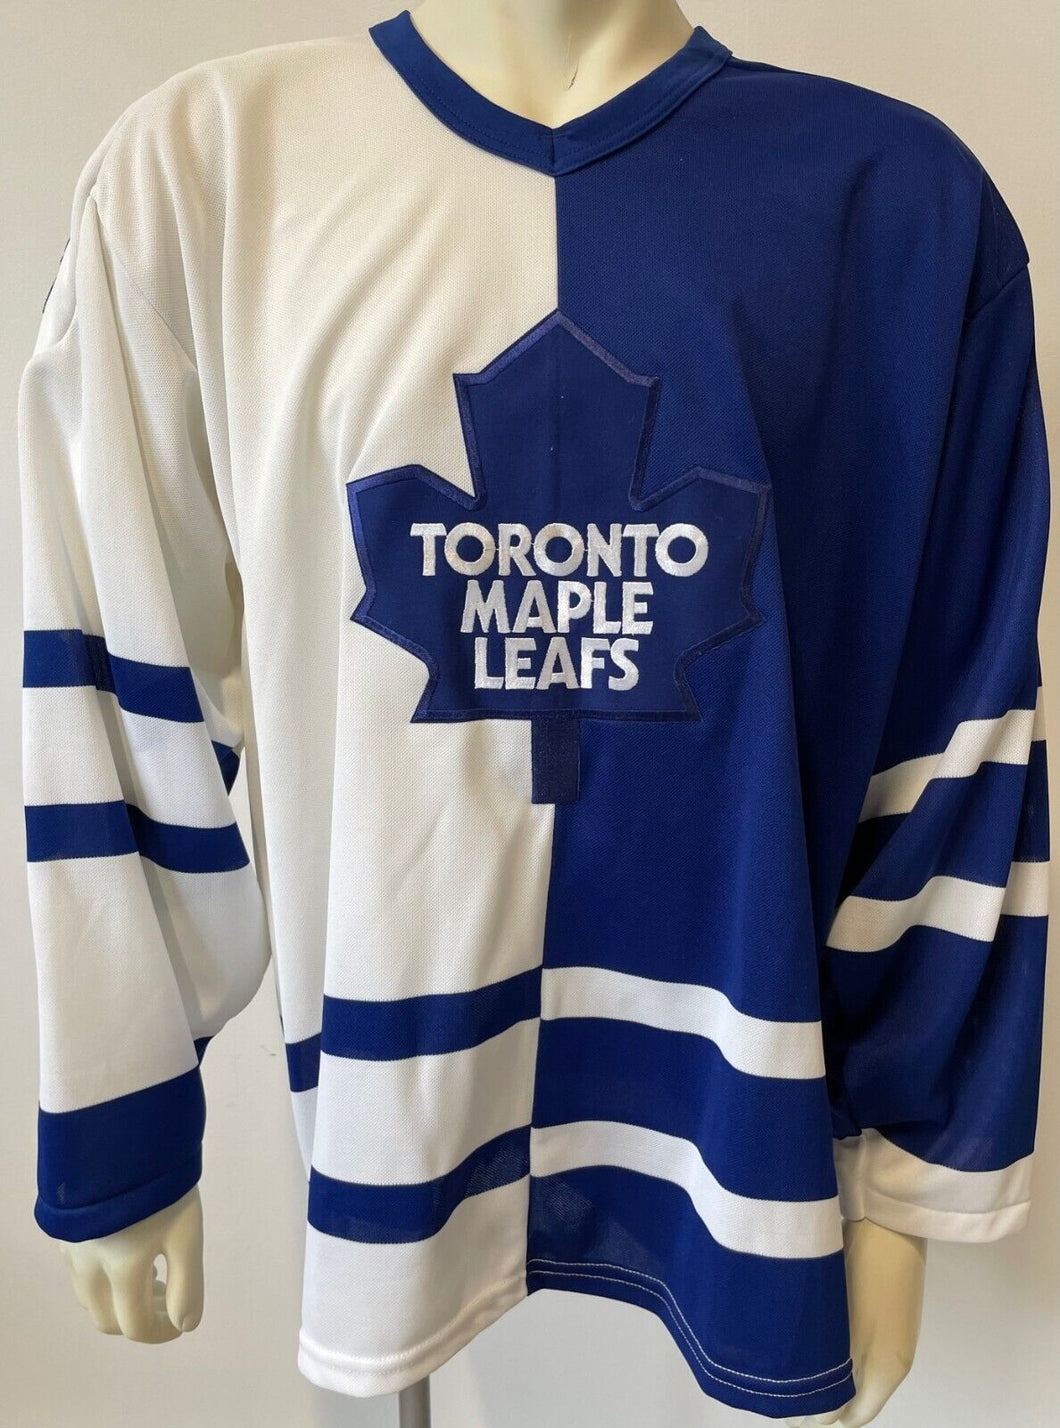 Vintage CCM Toronto Maple leafs long sleeve t shirt